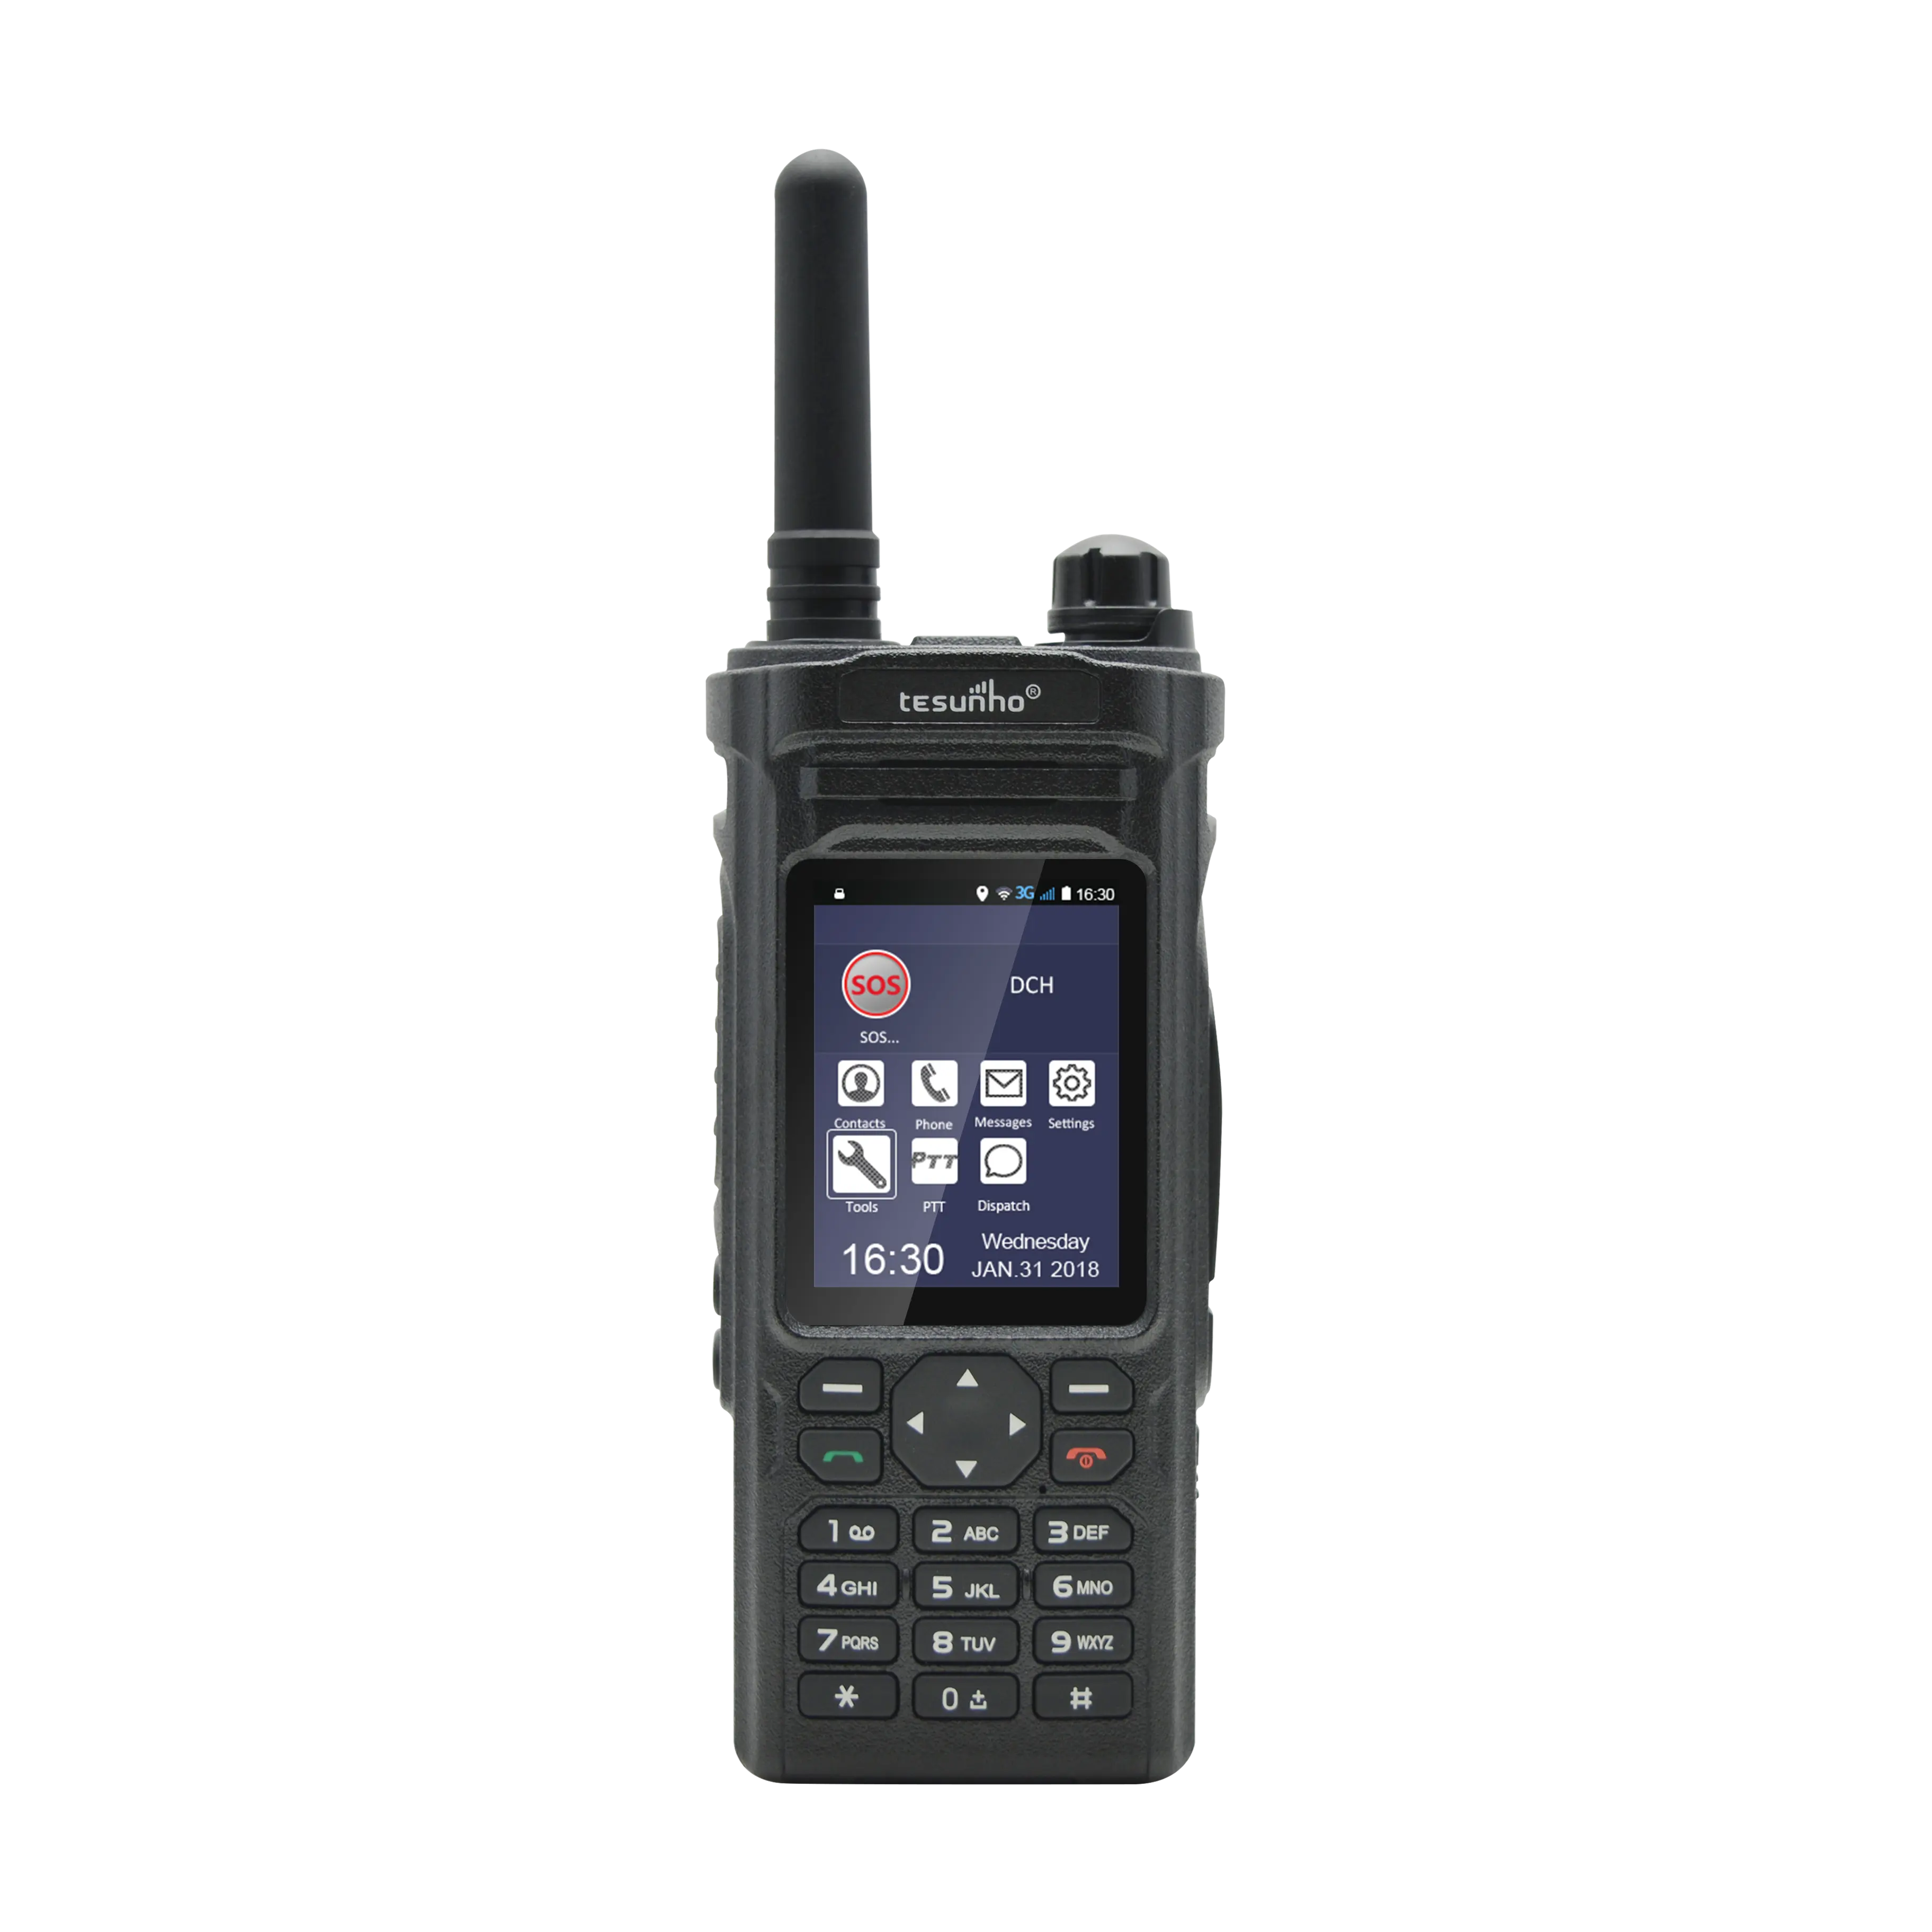 Tesunho High Tech Handheld Police Use Radio Android Walkie Talkie Phone Military Radio